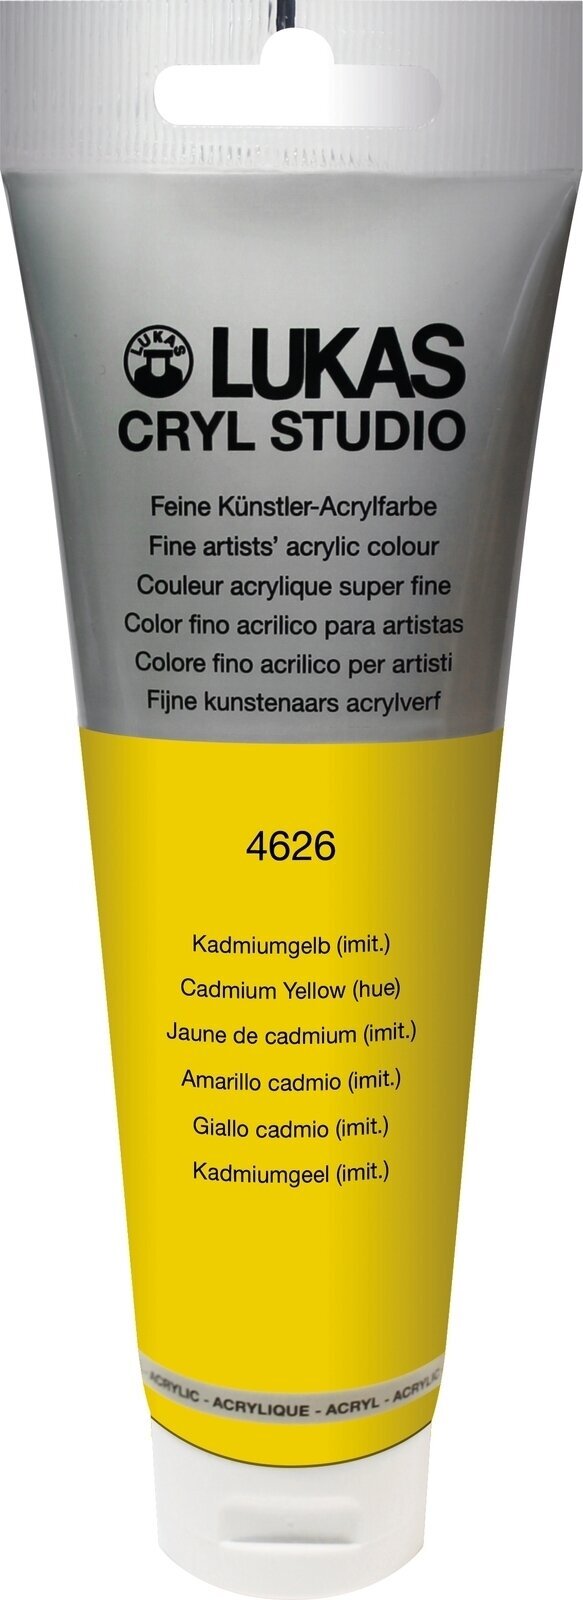 Akrylová farba Lukas Cryl Studio Acrylic Paint Plastic Tube Akrylová farba Cadmium Yellow Hue 125 ml 1 ks